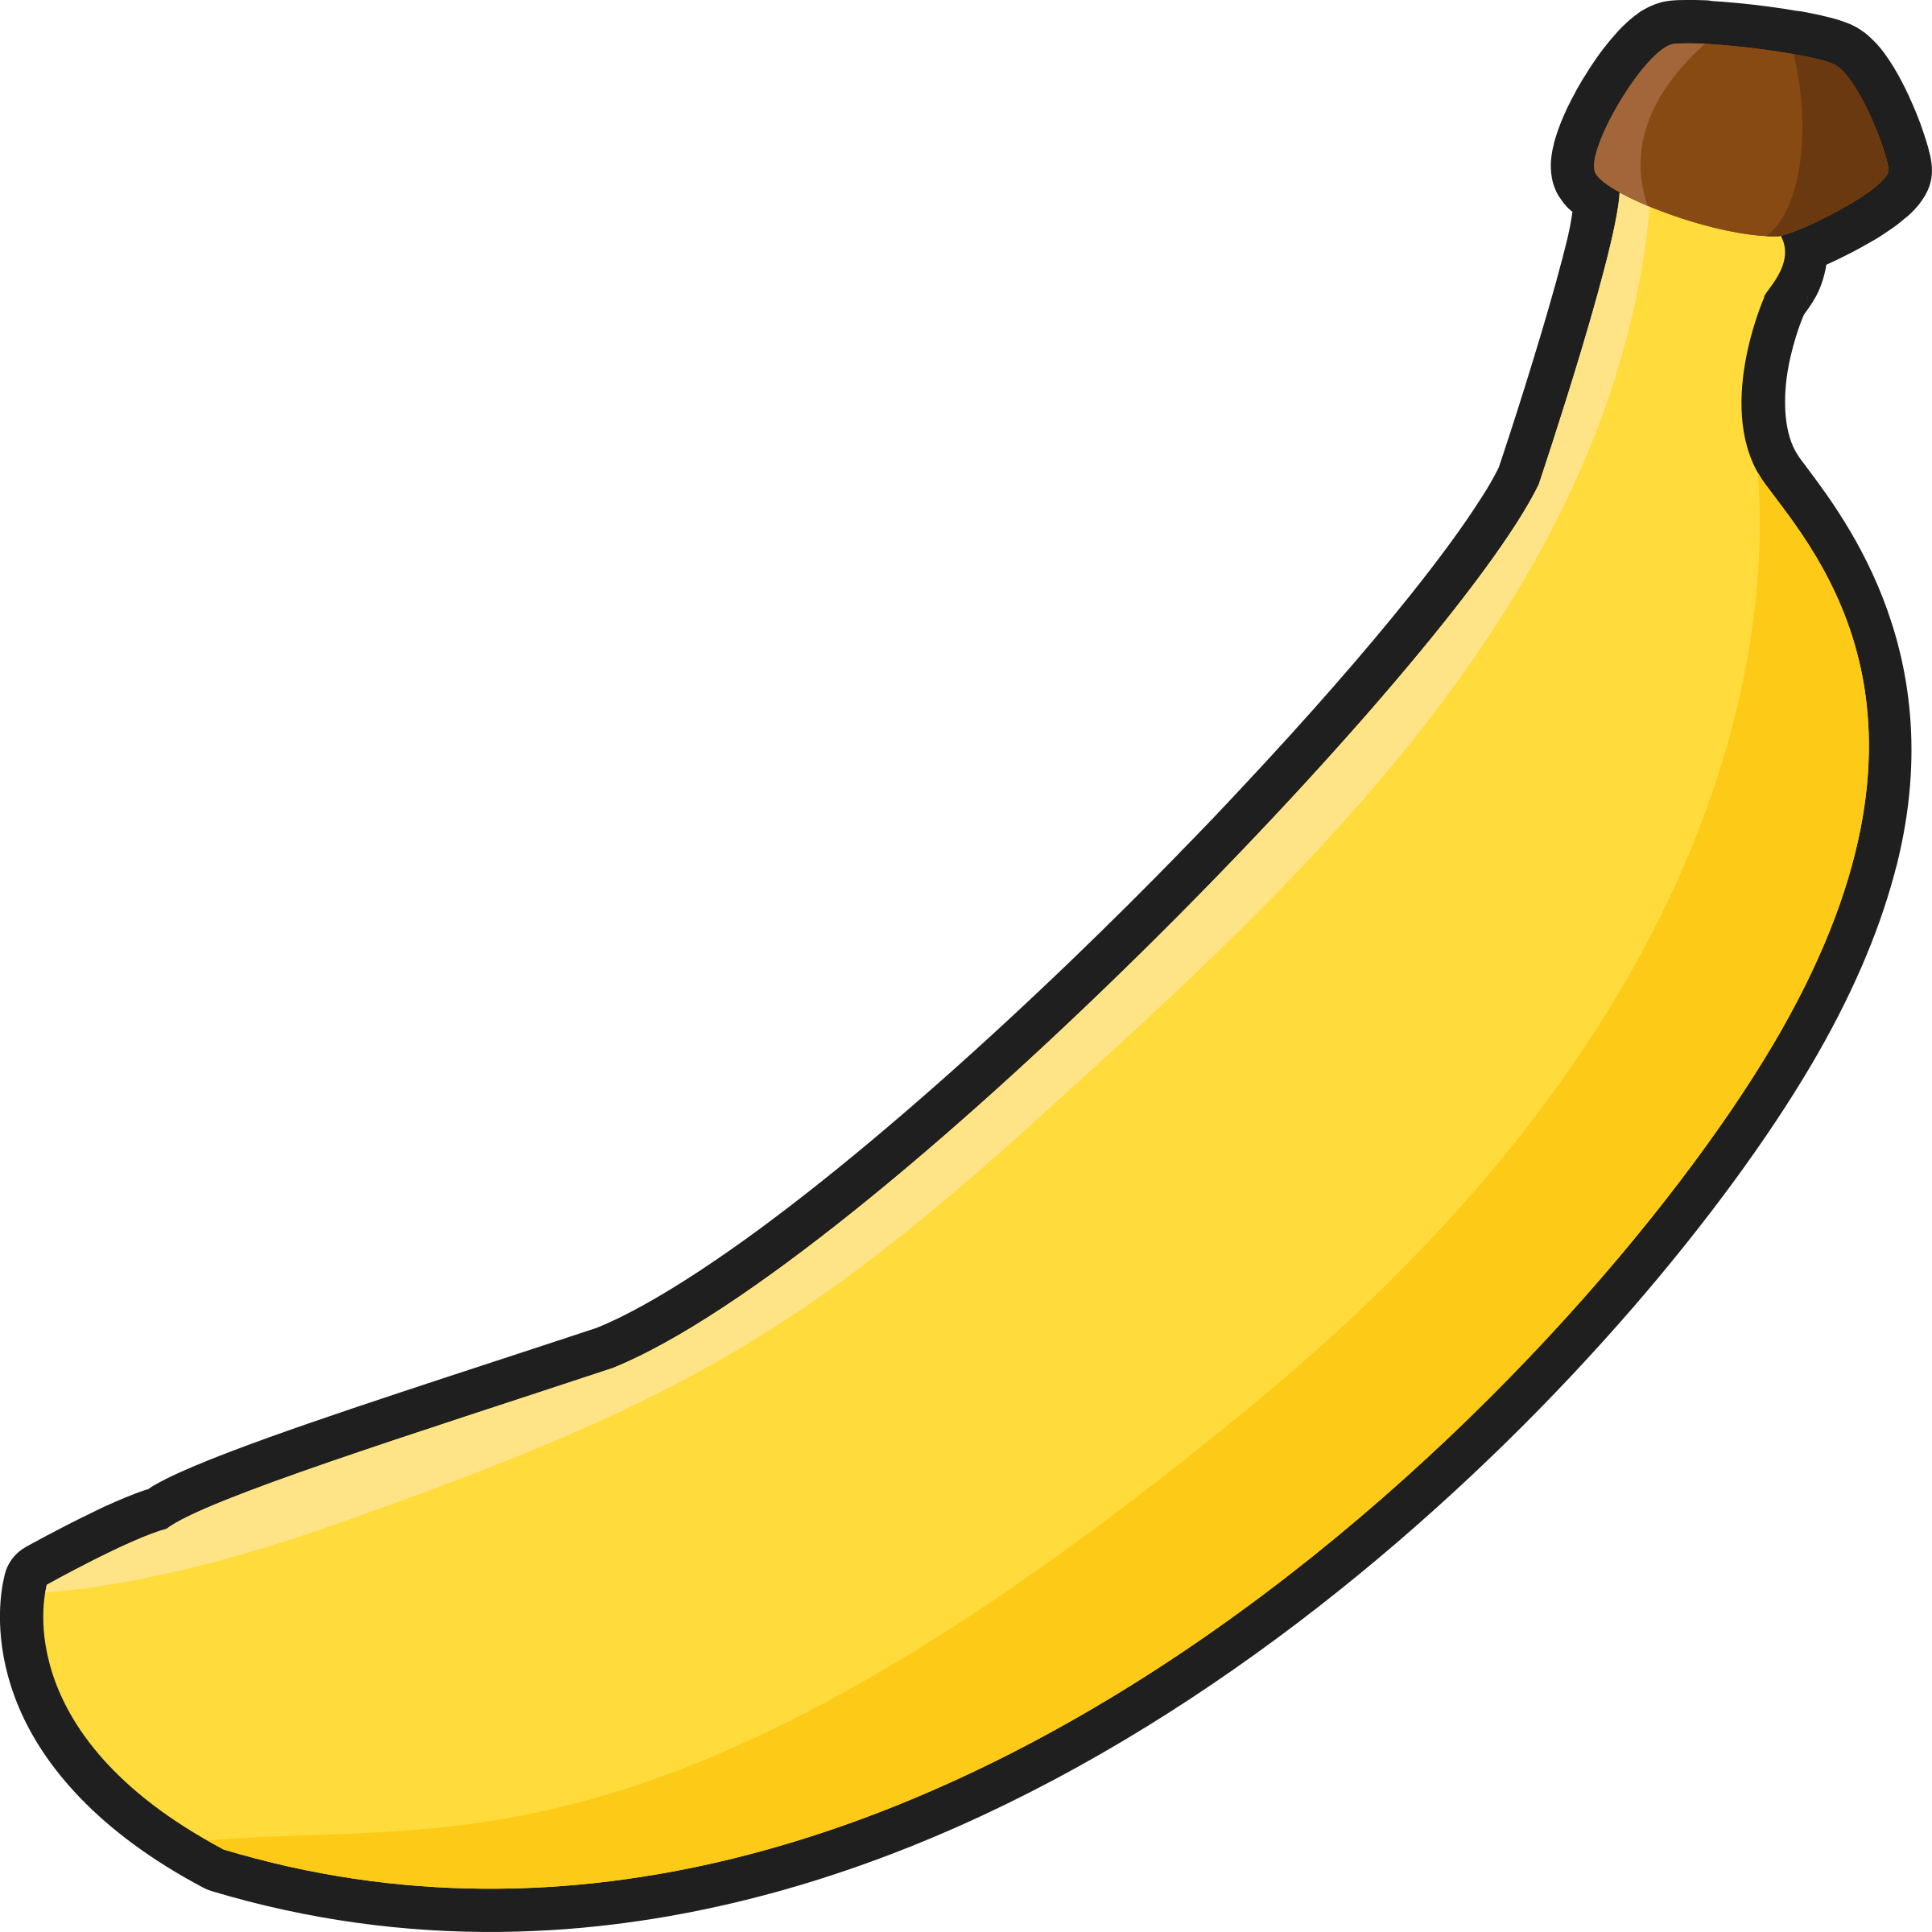 Banana Download Transparent PNG Image